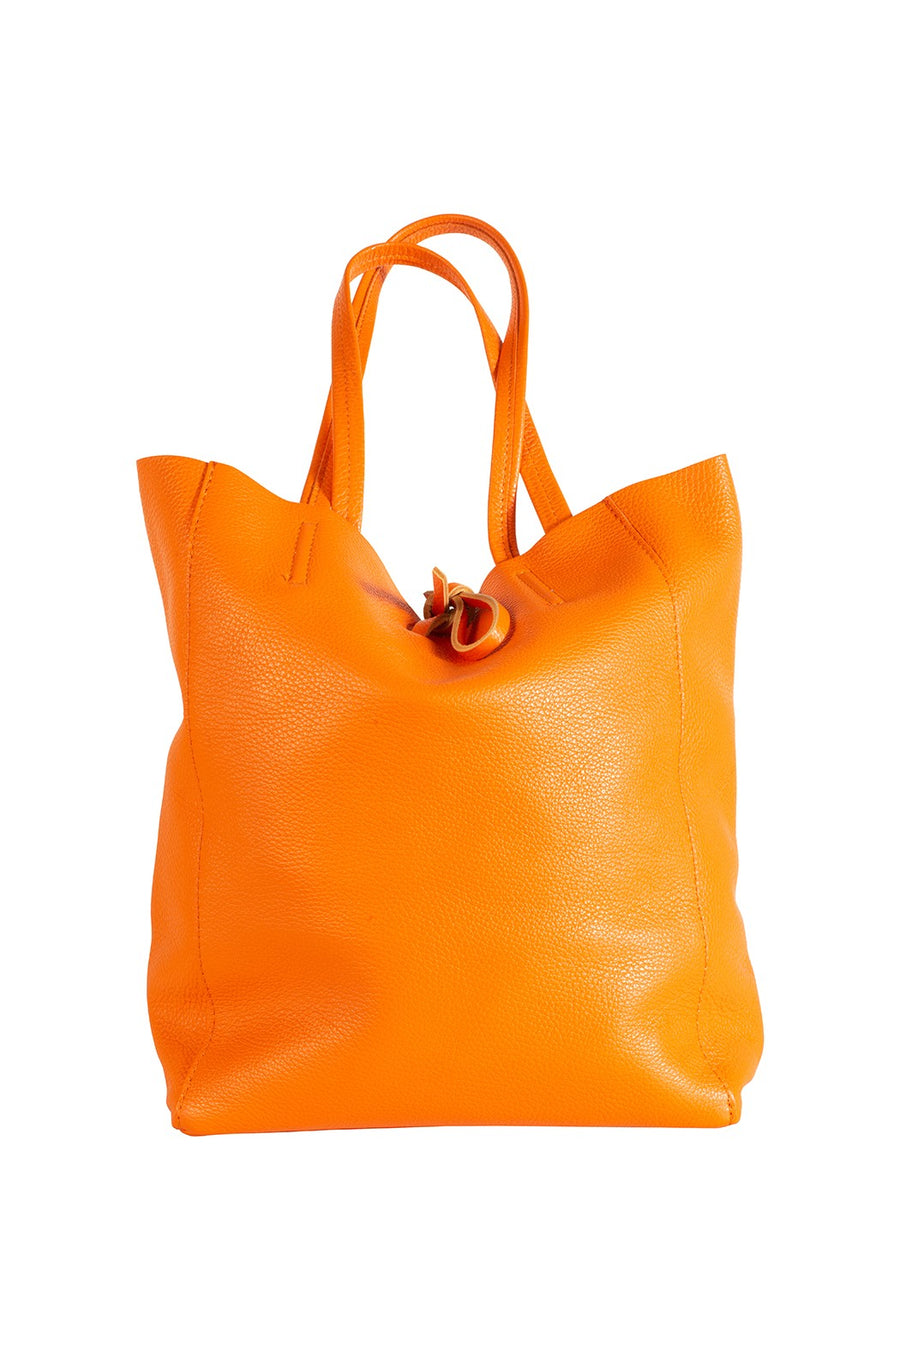 Italian leather shopper tote bag tie top orange